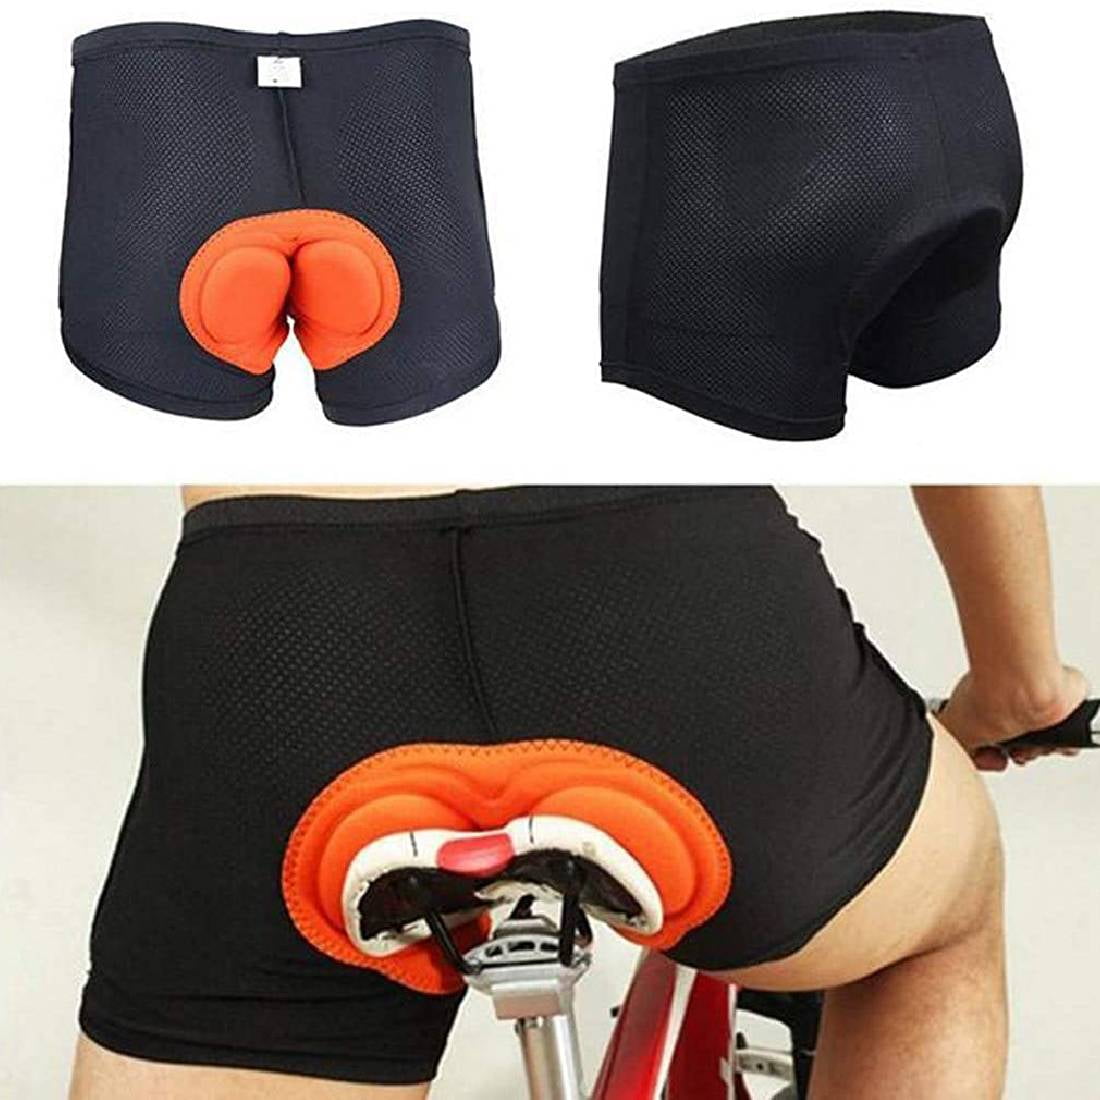 Details about  / Men Women 3D Gel Padded Bicycle Cycling Bike Underwear Short Pants Riding Shorts